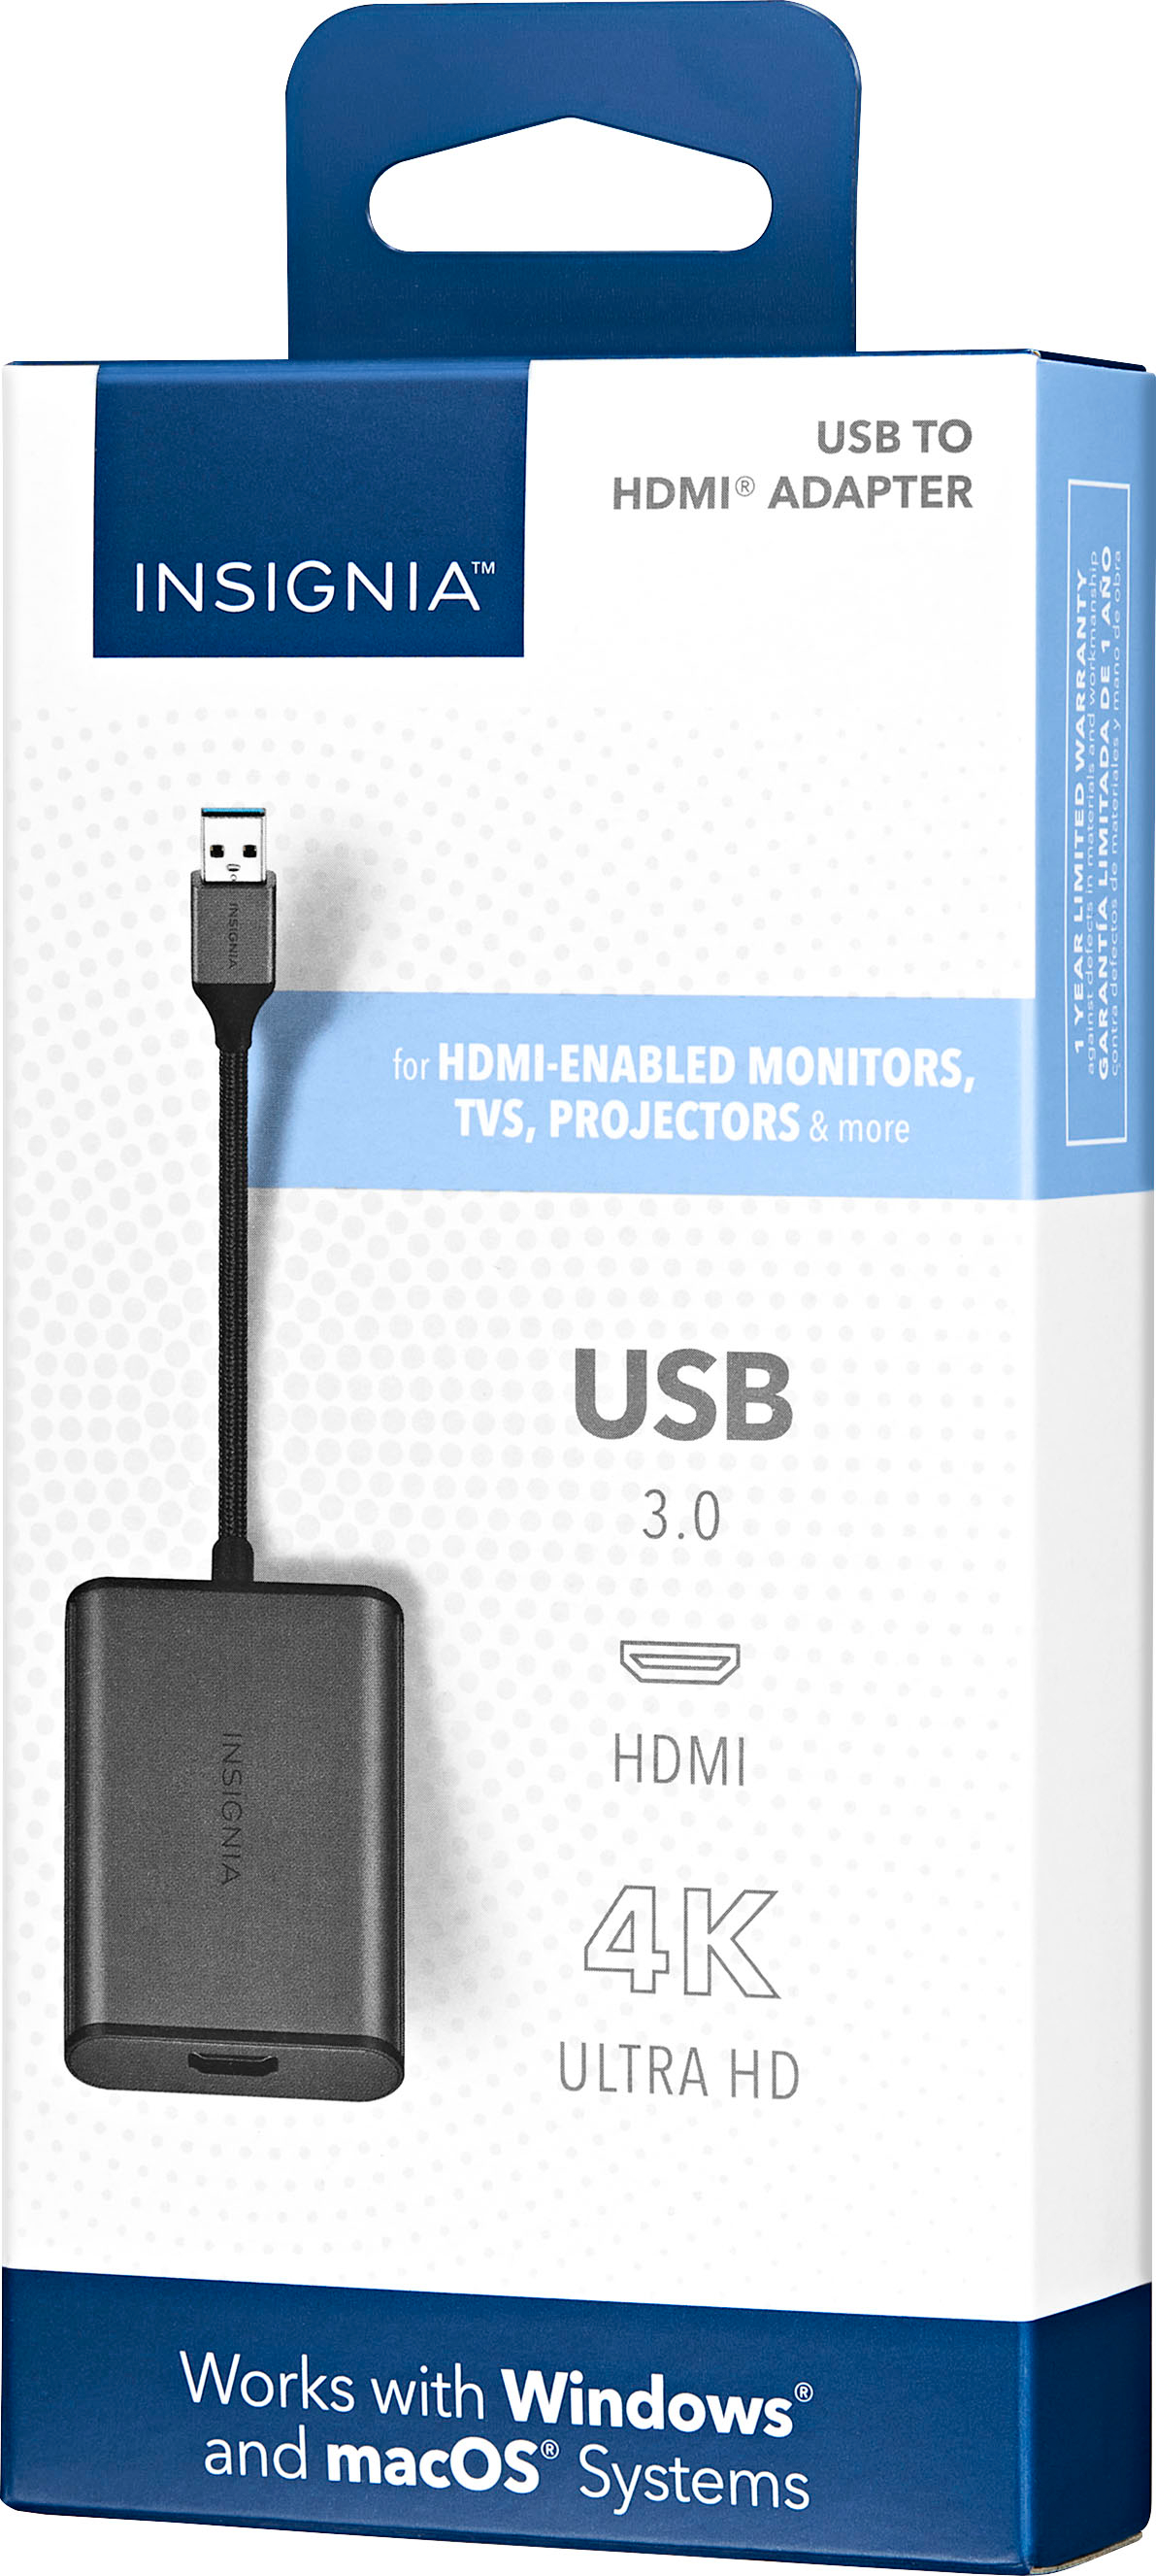 Insignia - USB to HDMI Adapter - Black